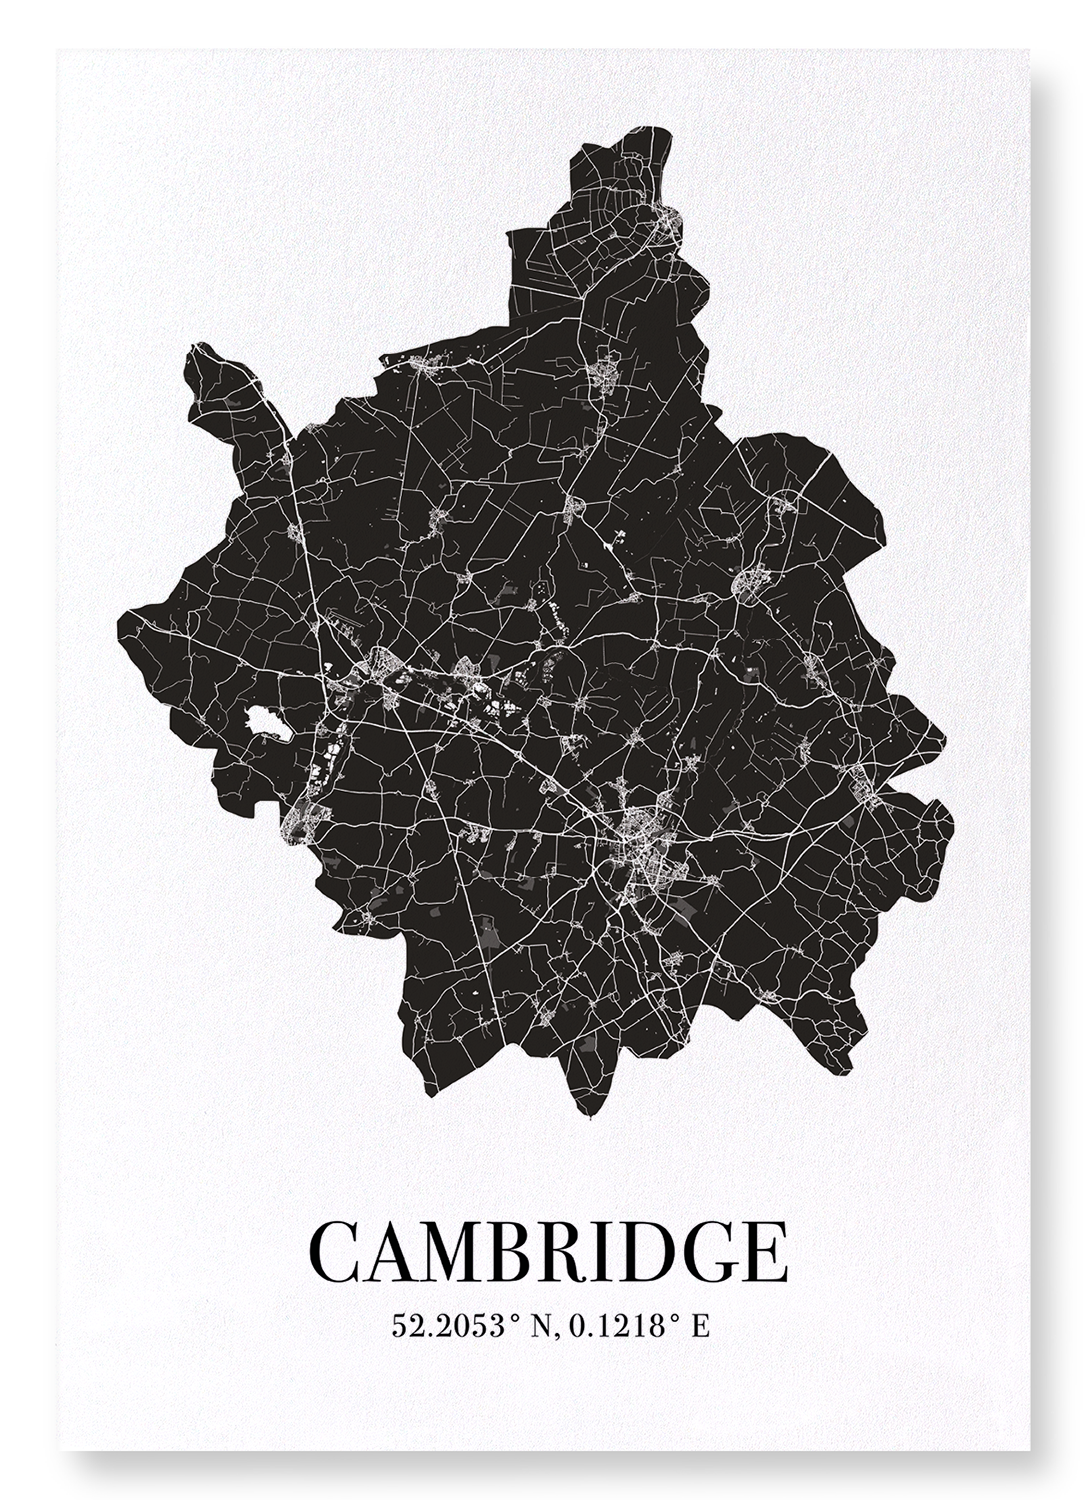 CAMBRIDGE CUTOUT: Map Cutout Art Print